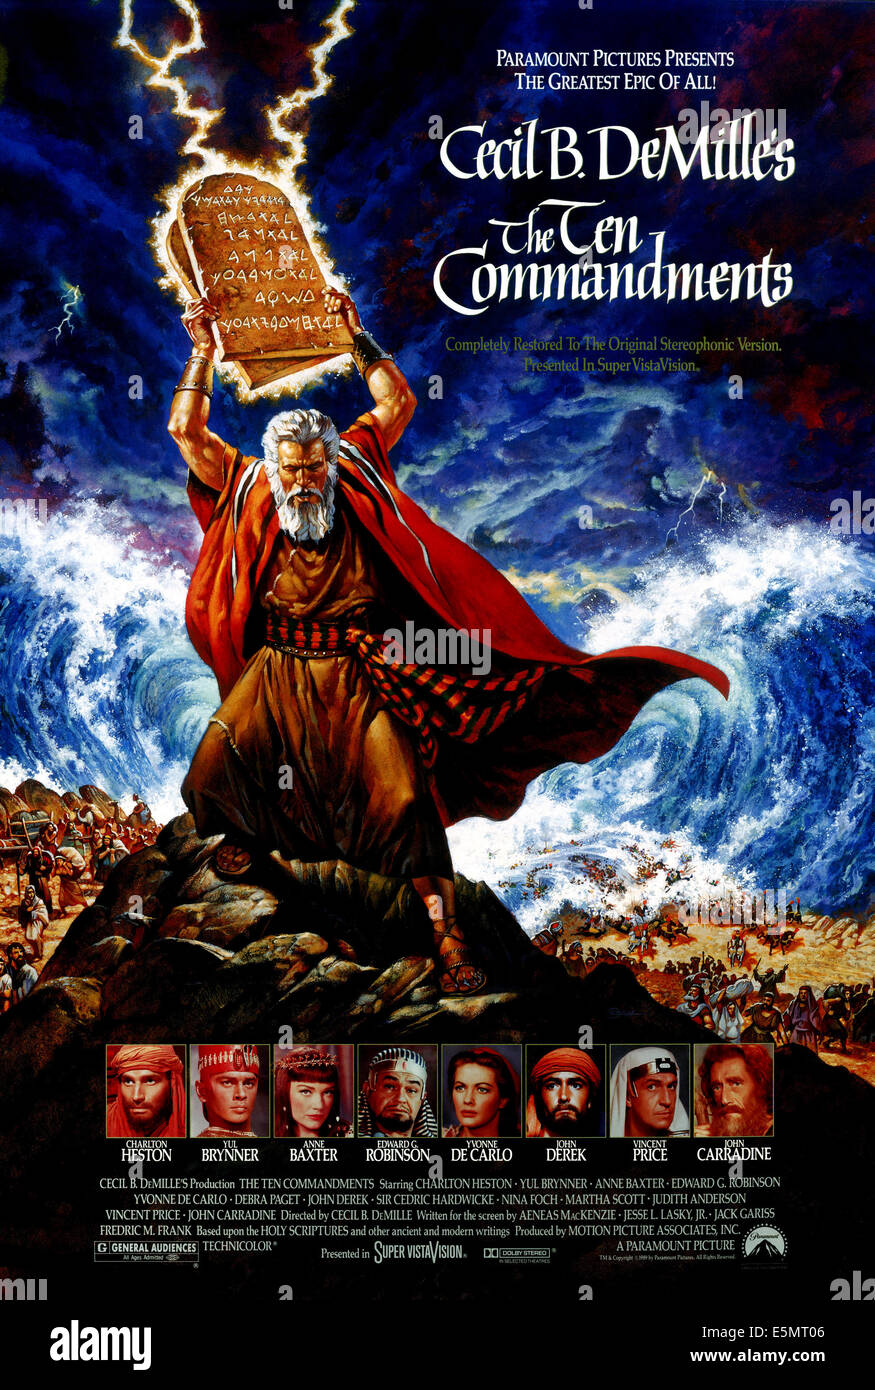 10 commandments movie poster